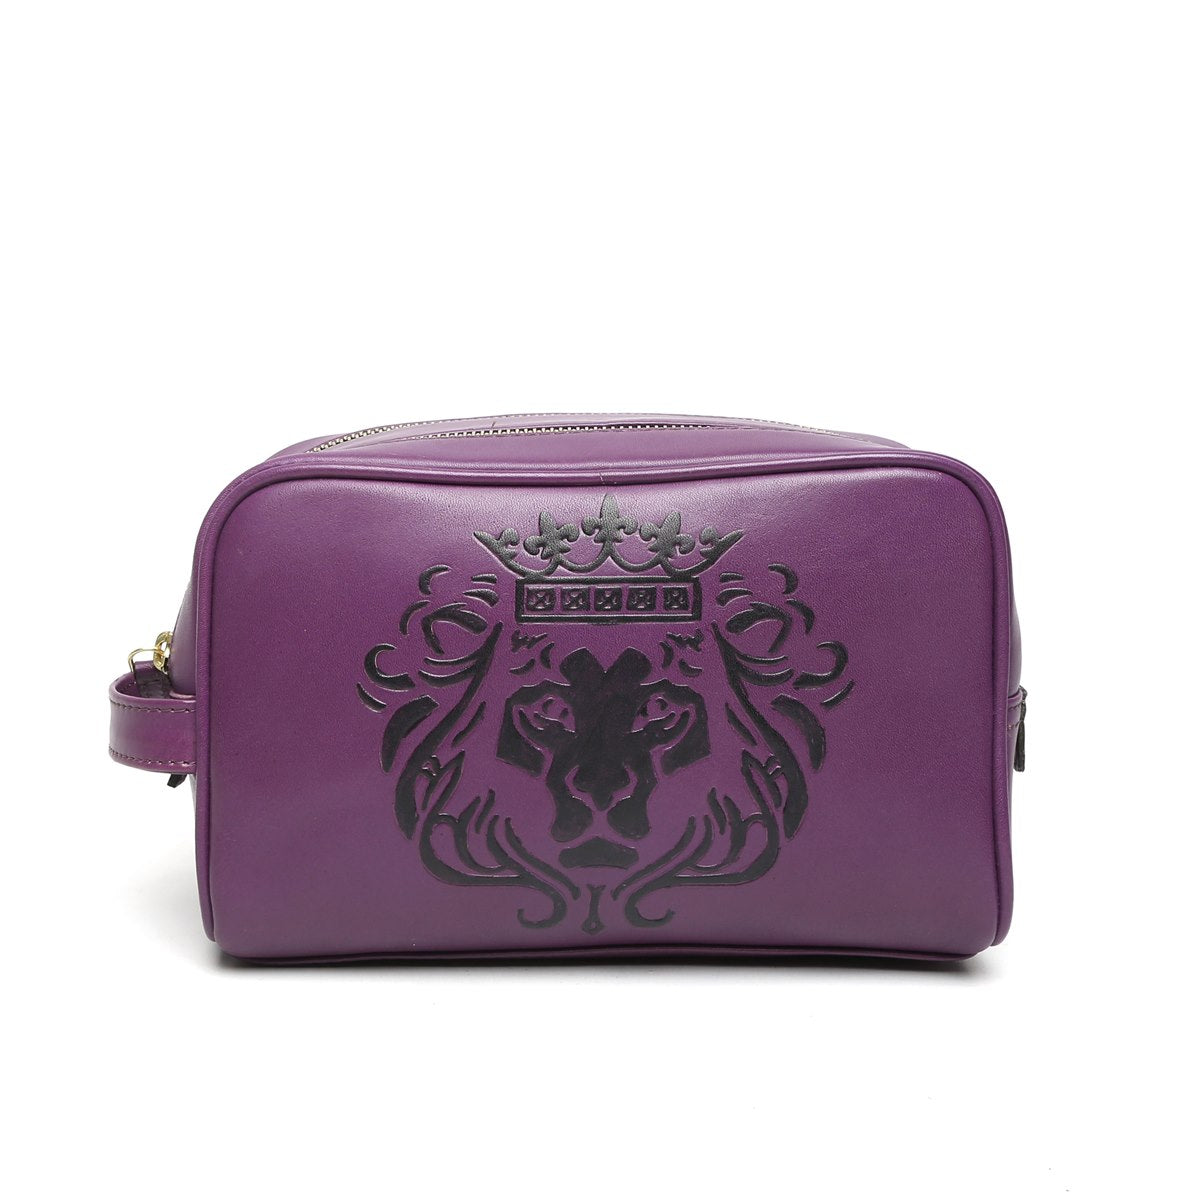 Brune & Bareskin Purple Color Leather Shaving Kit / Bathroom Kit